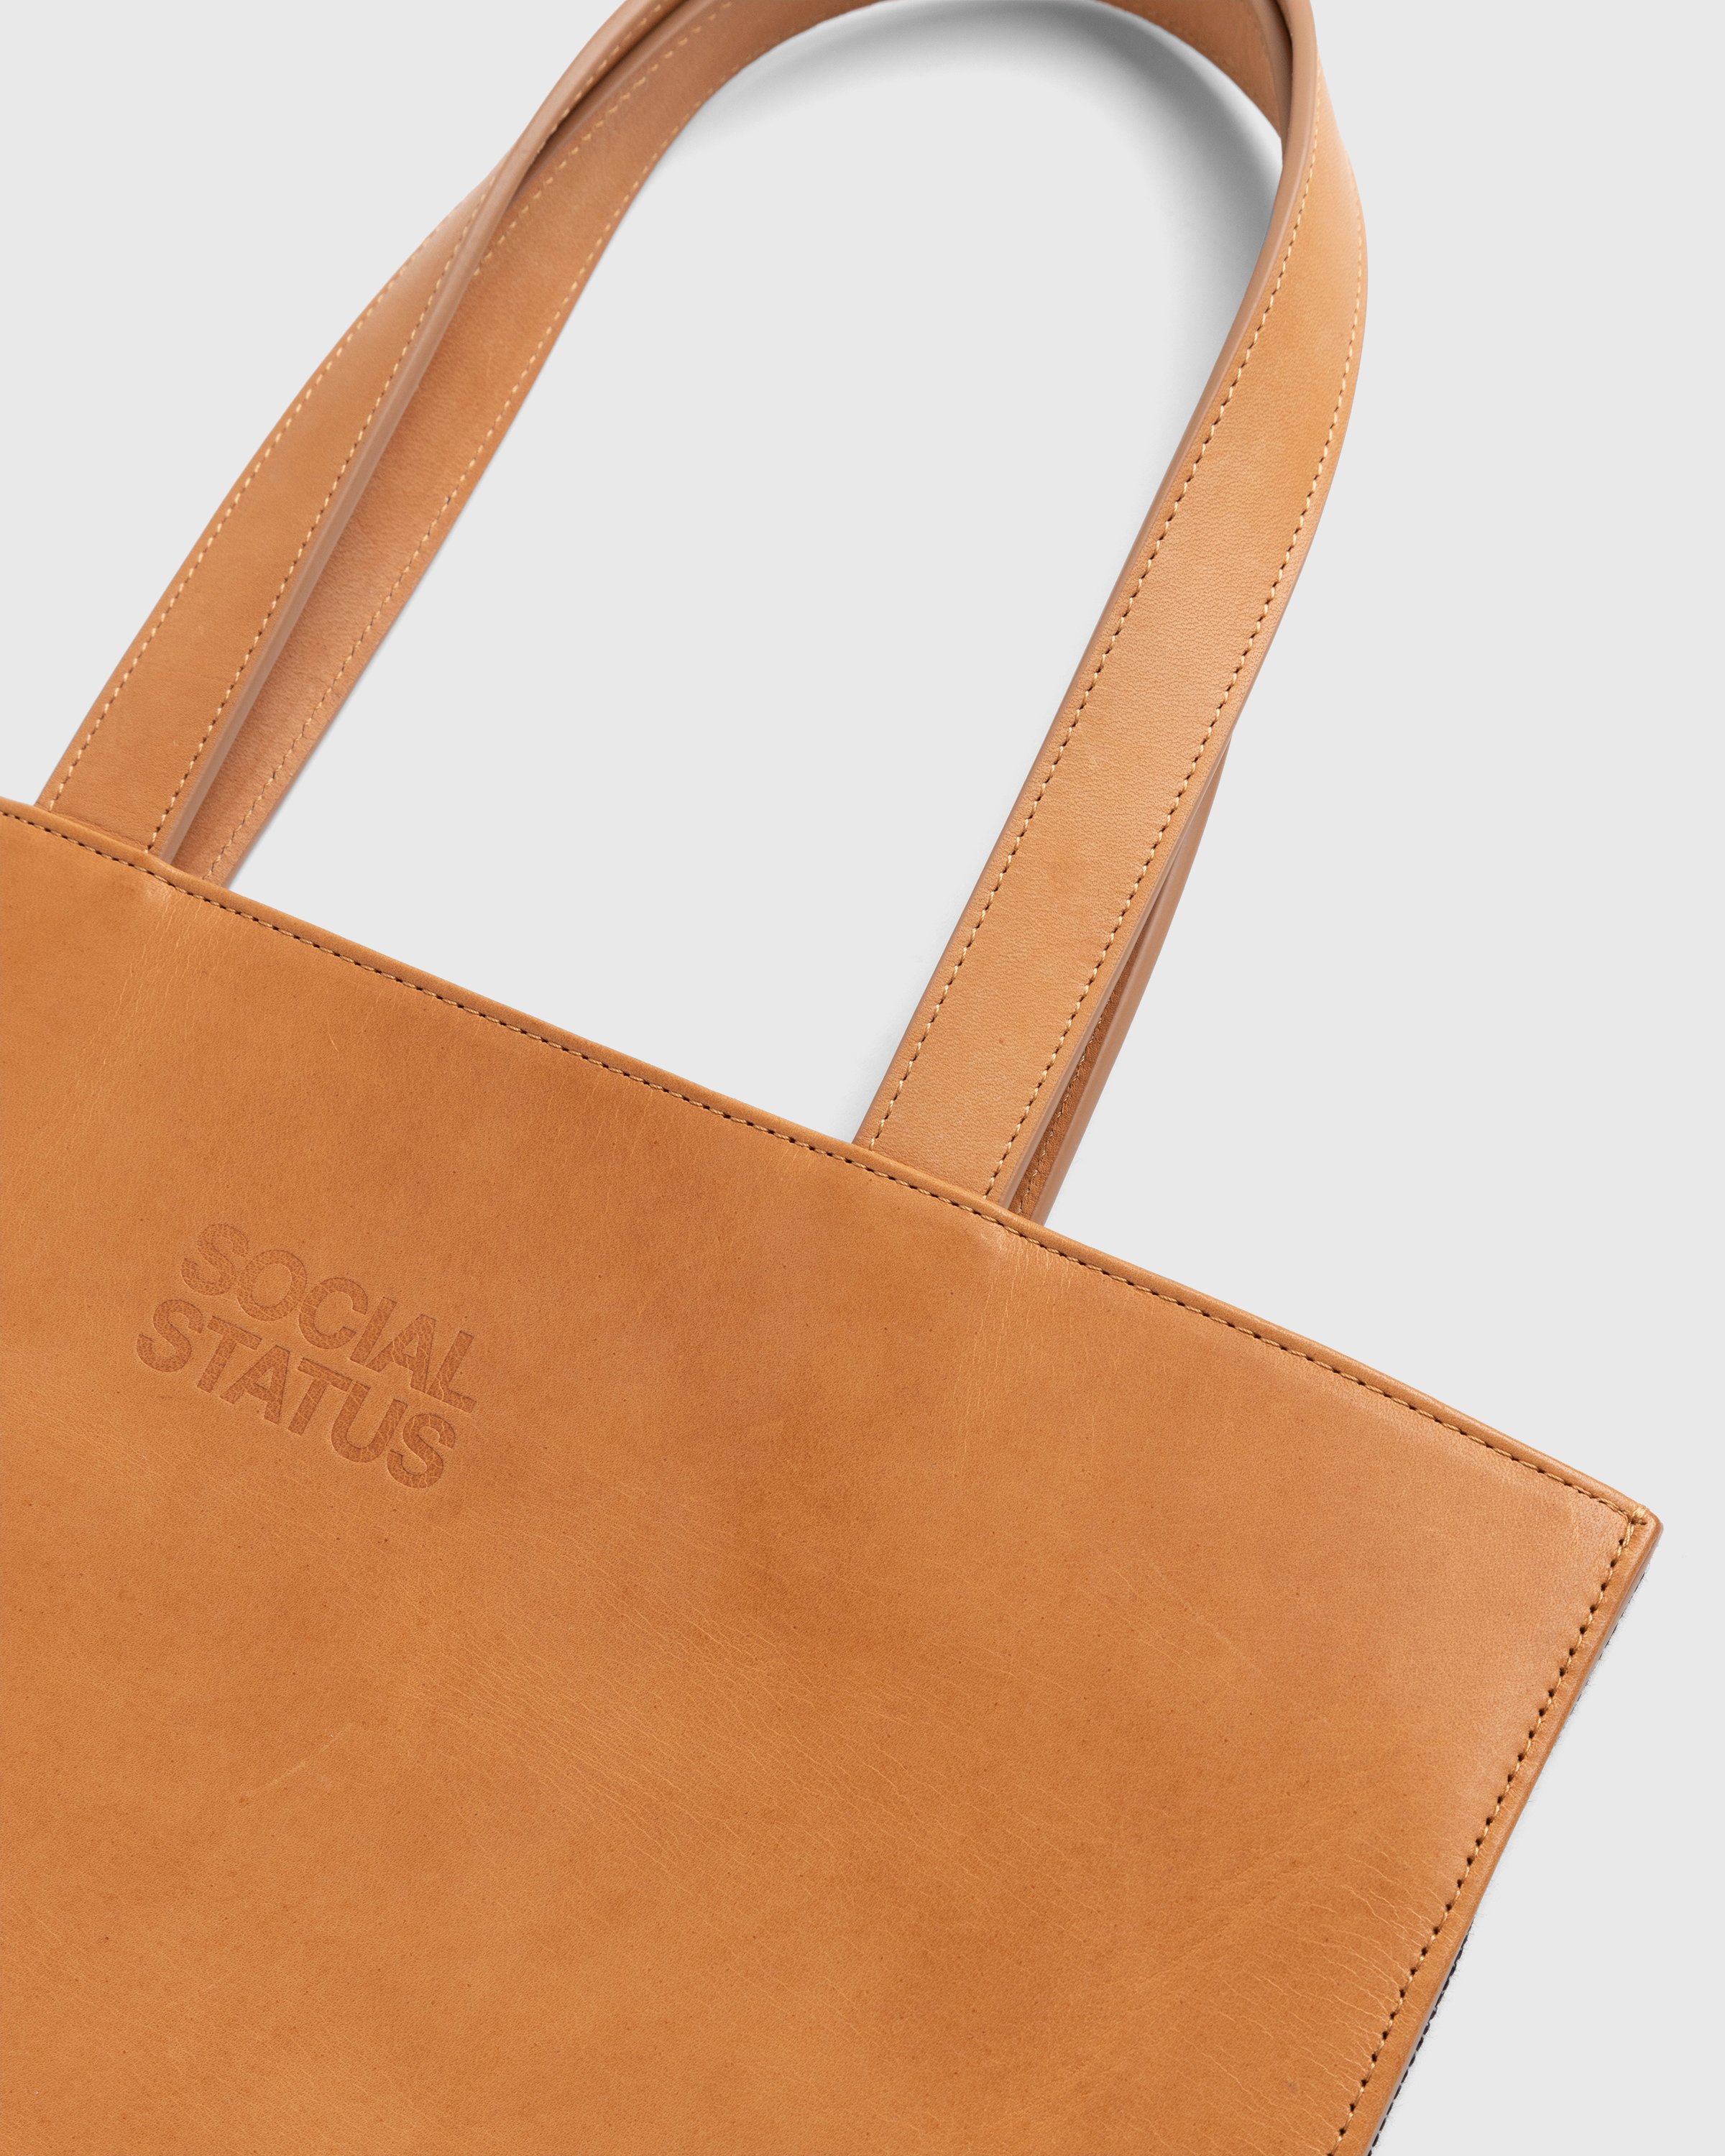 A.P.C. x Jean Touitou - Social Status Shopping Bag Orange - Accessories - Orange - Image 2